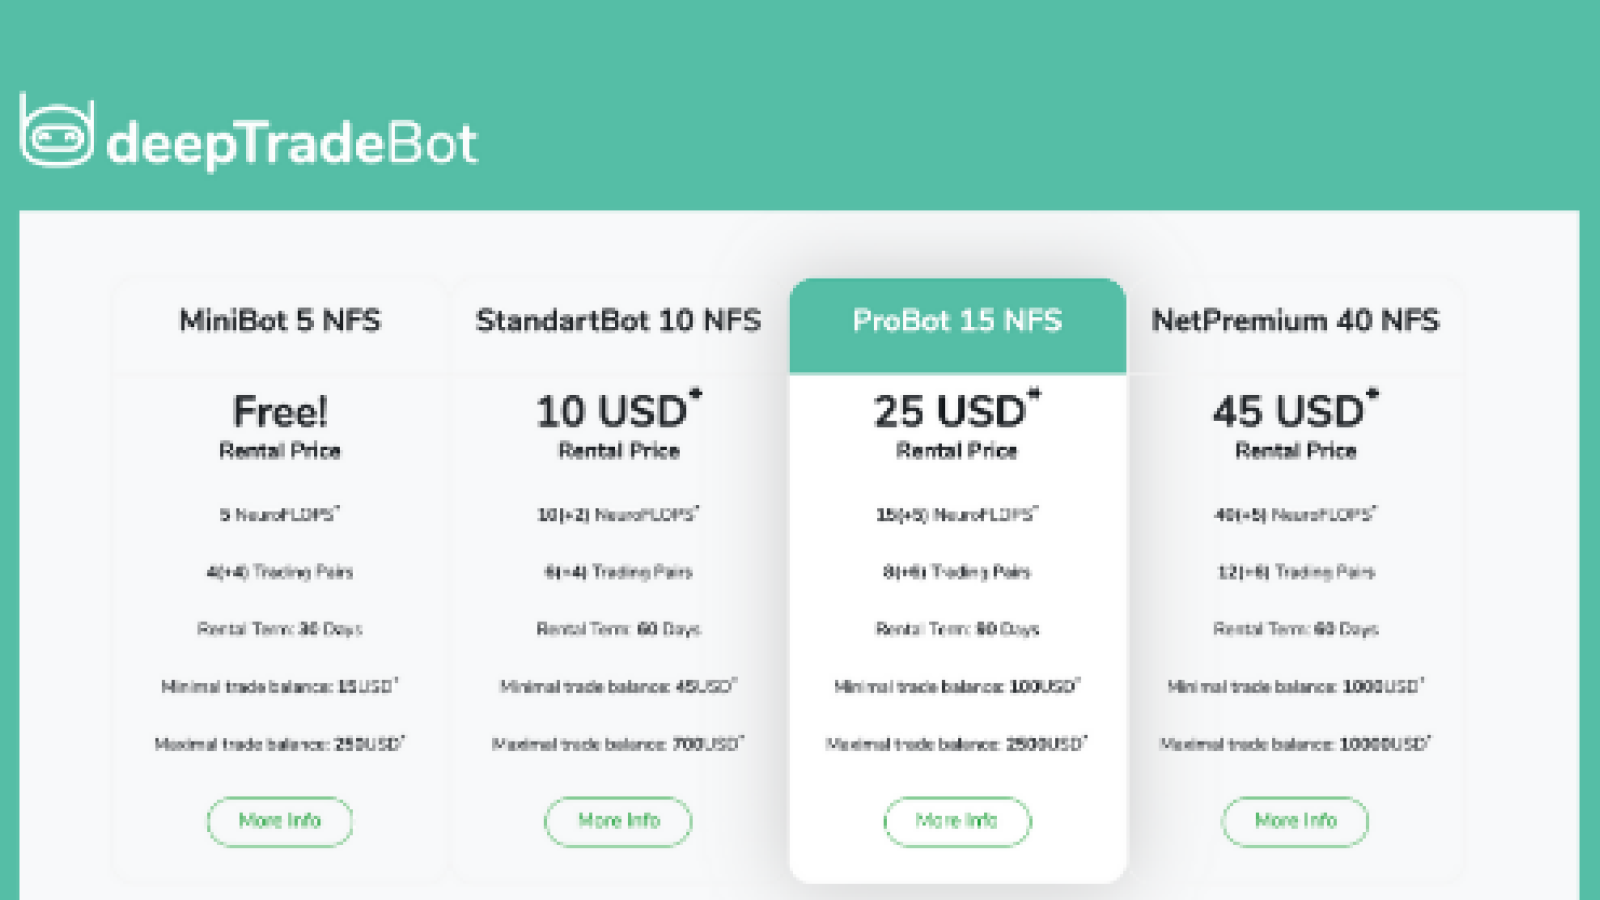 DeepTradeBot offers four types of rental plans